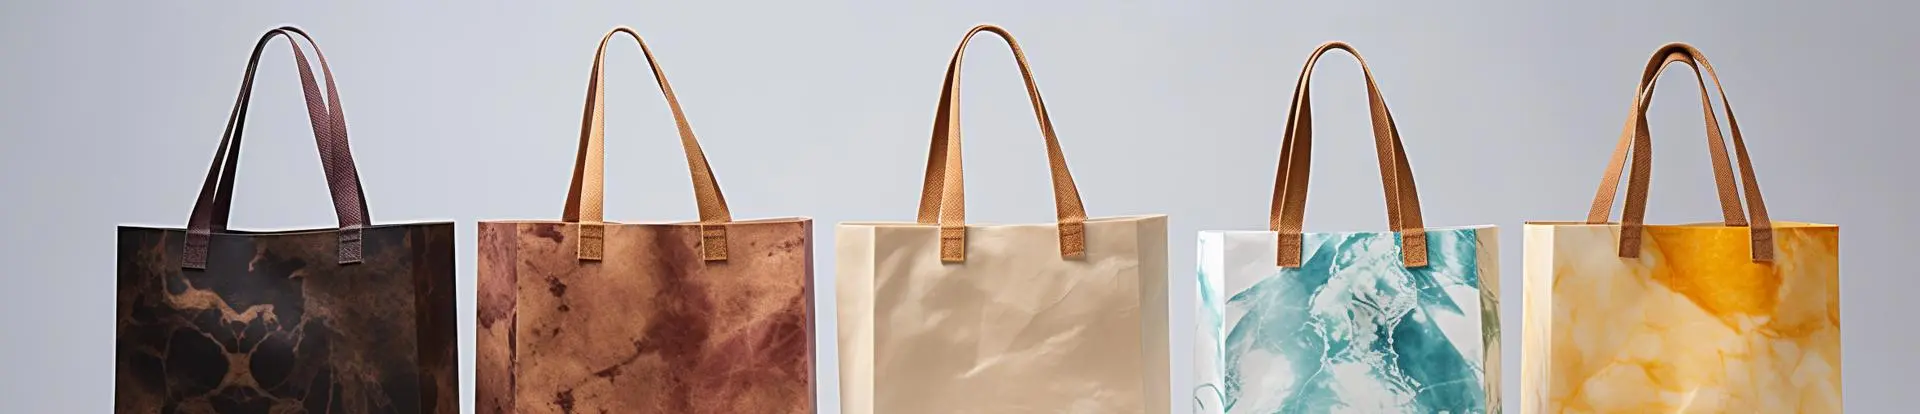 Plant Fiber Shopping Bags